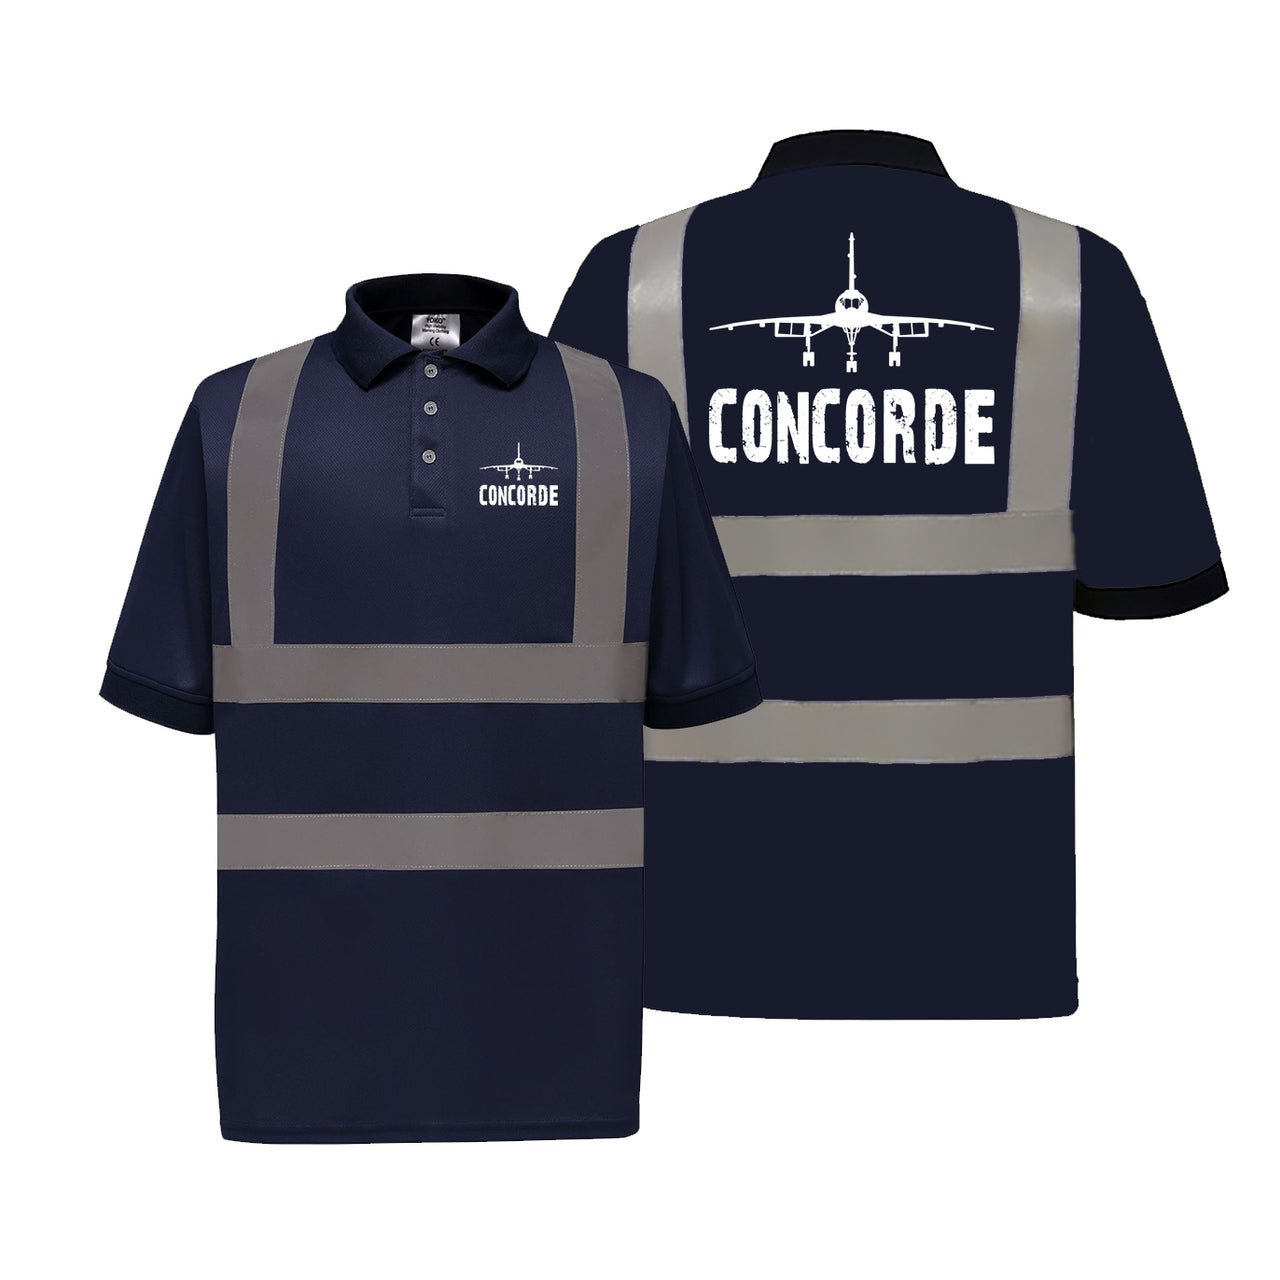 Concorde & Plane Designed Reflective Polo T-Shirts